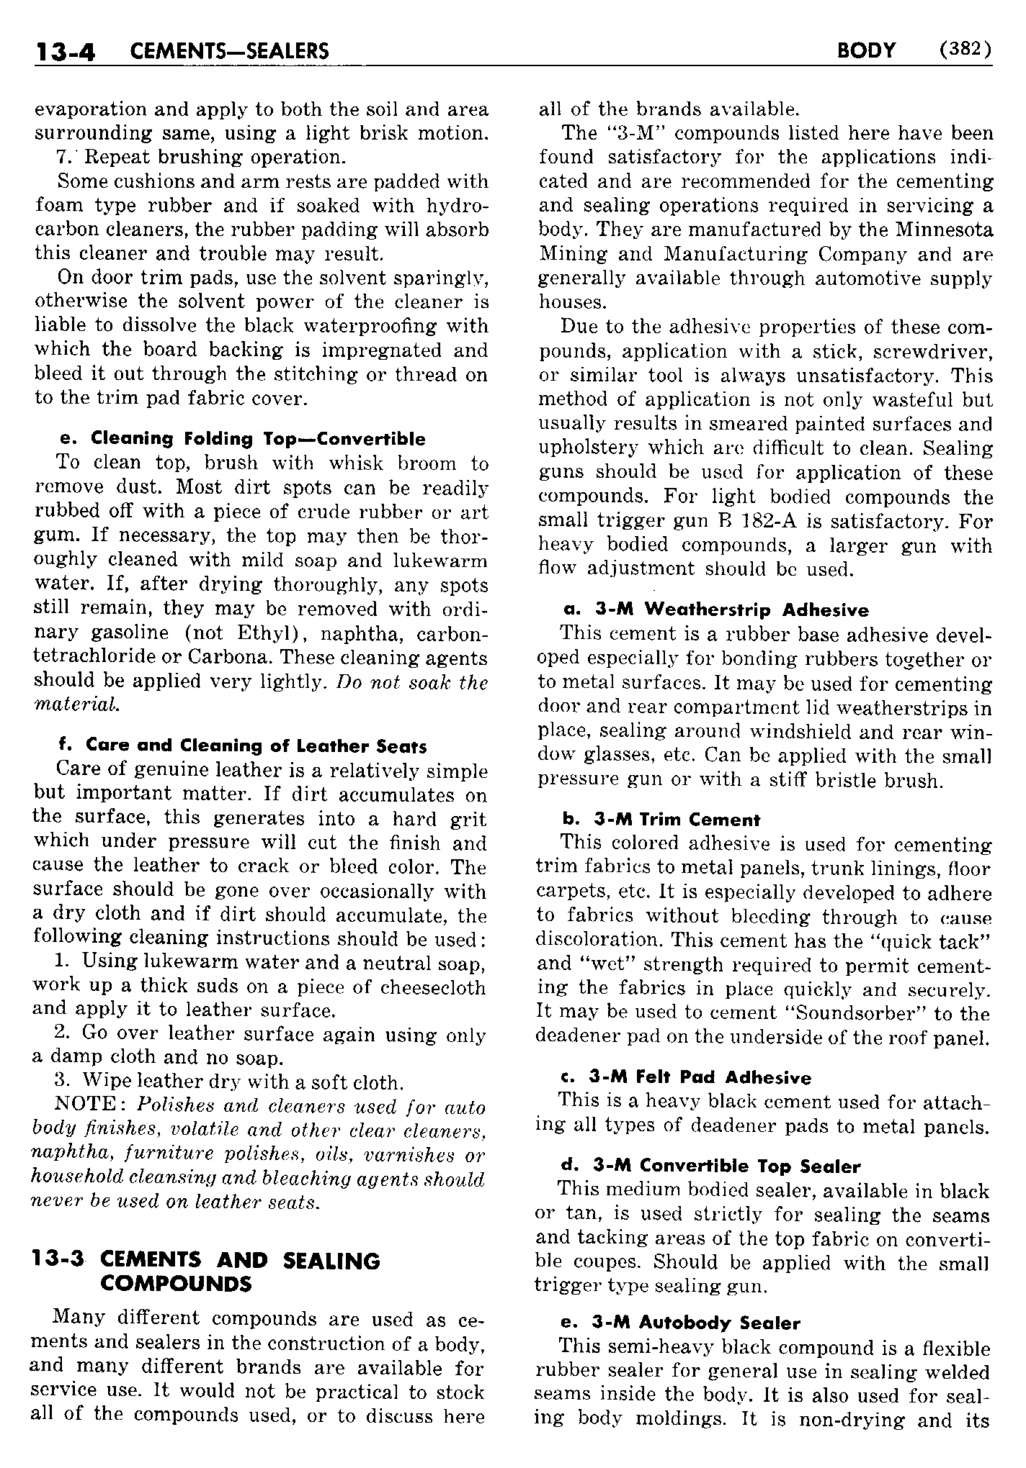 n_14 1950 Buick Shop Manual - Body-004-004.jpg